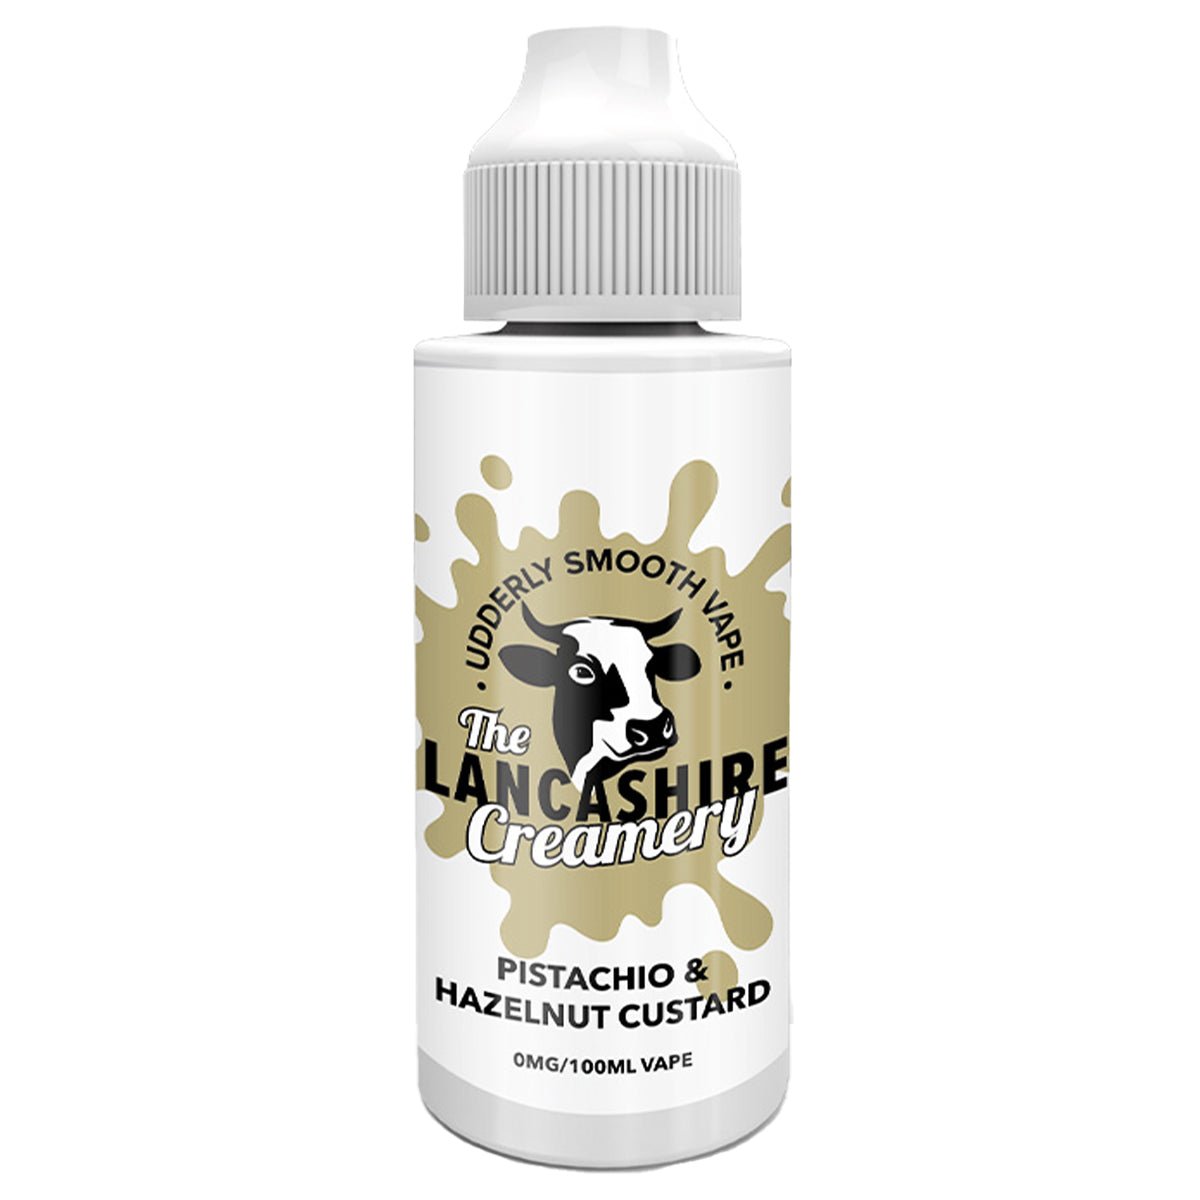 Pistachio Hazelnut Custard 100ml Shortfill By The Lancashire Creamery - Prime Vapes UK